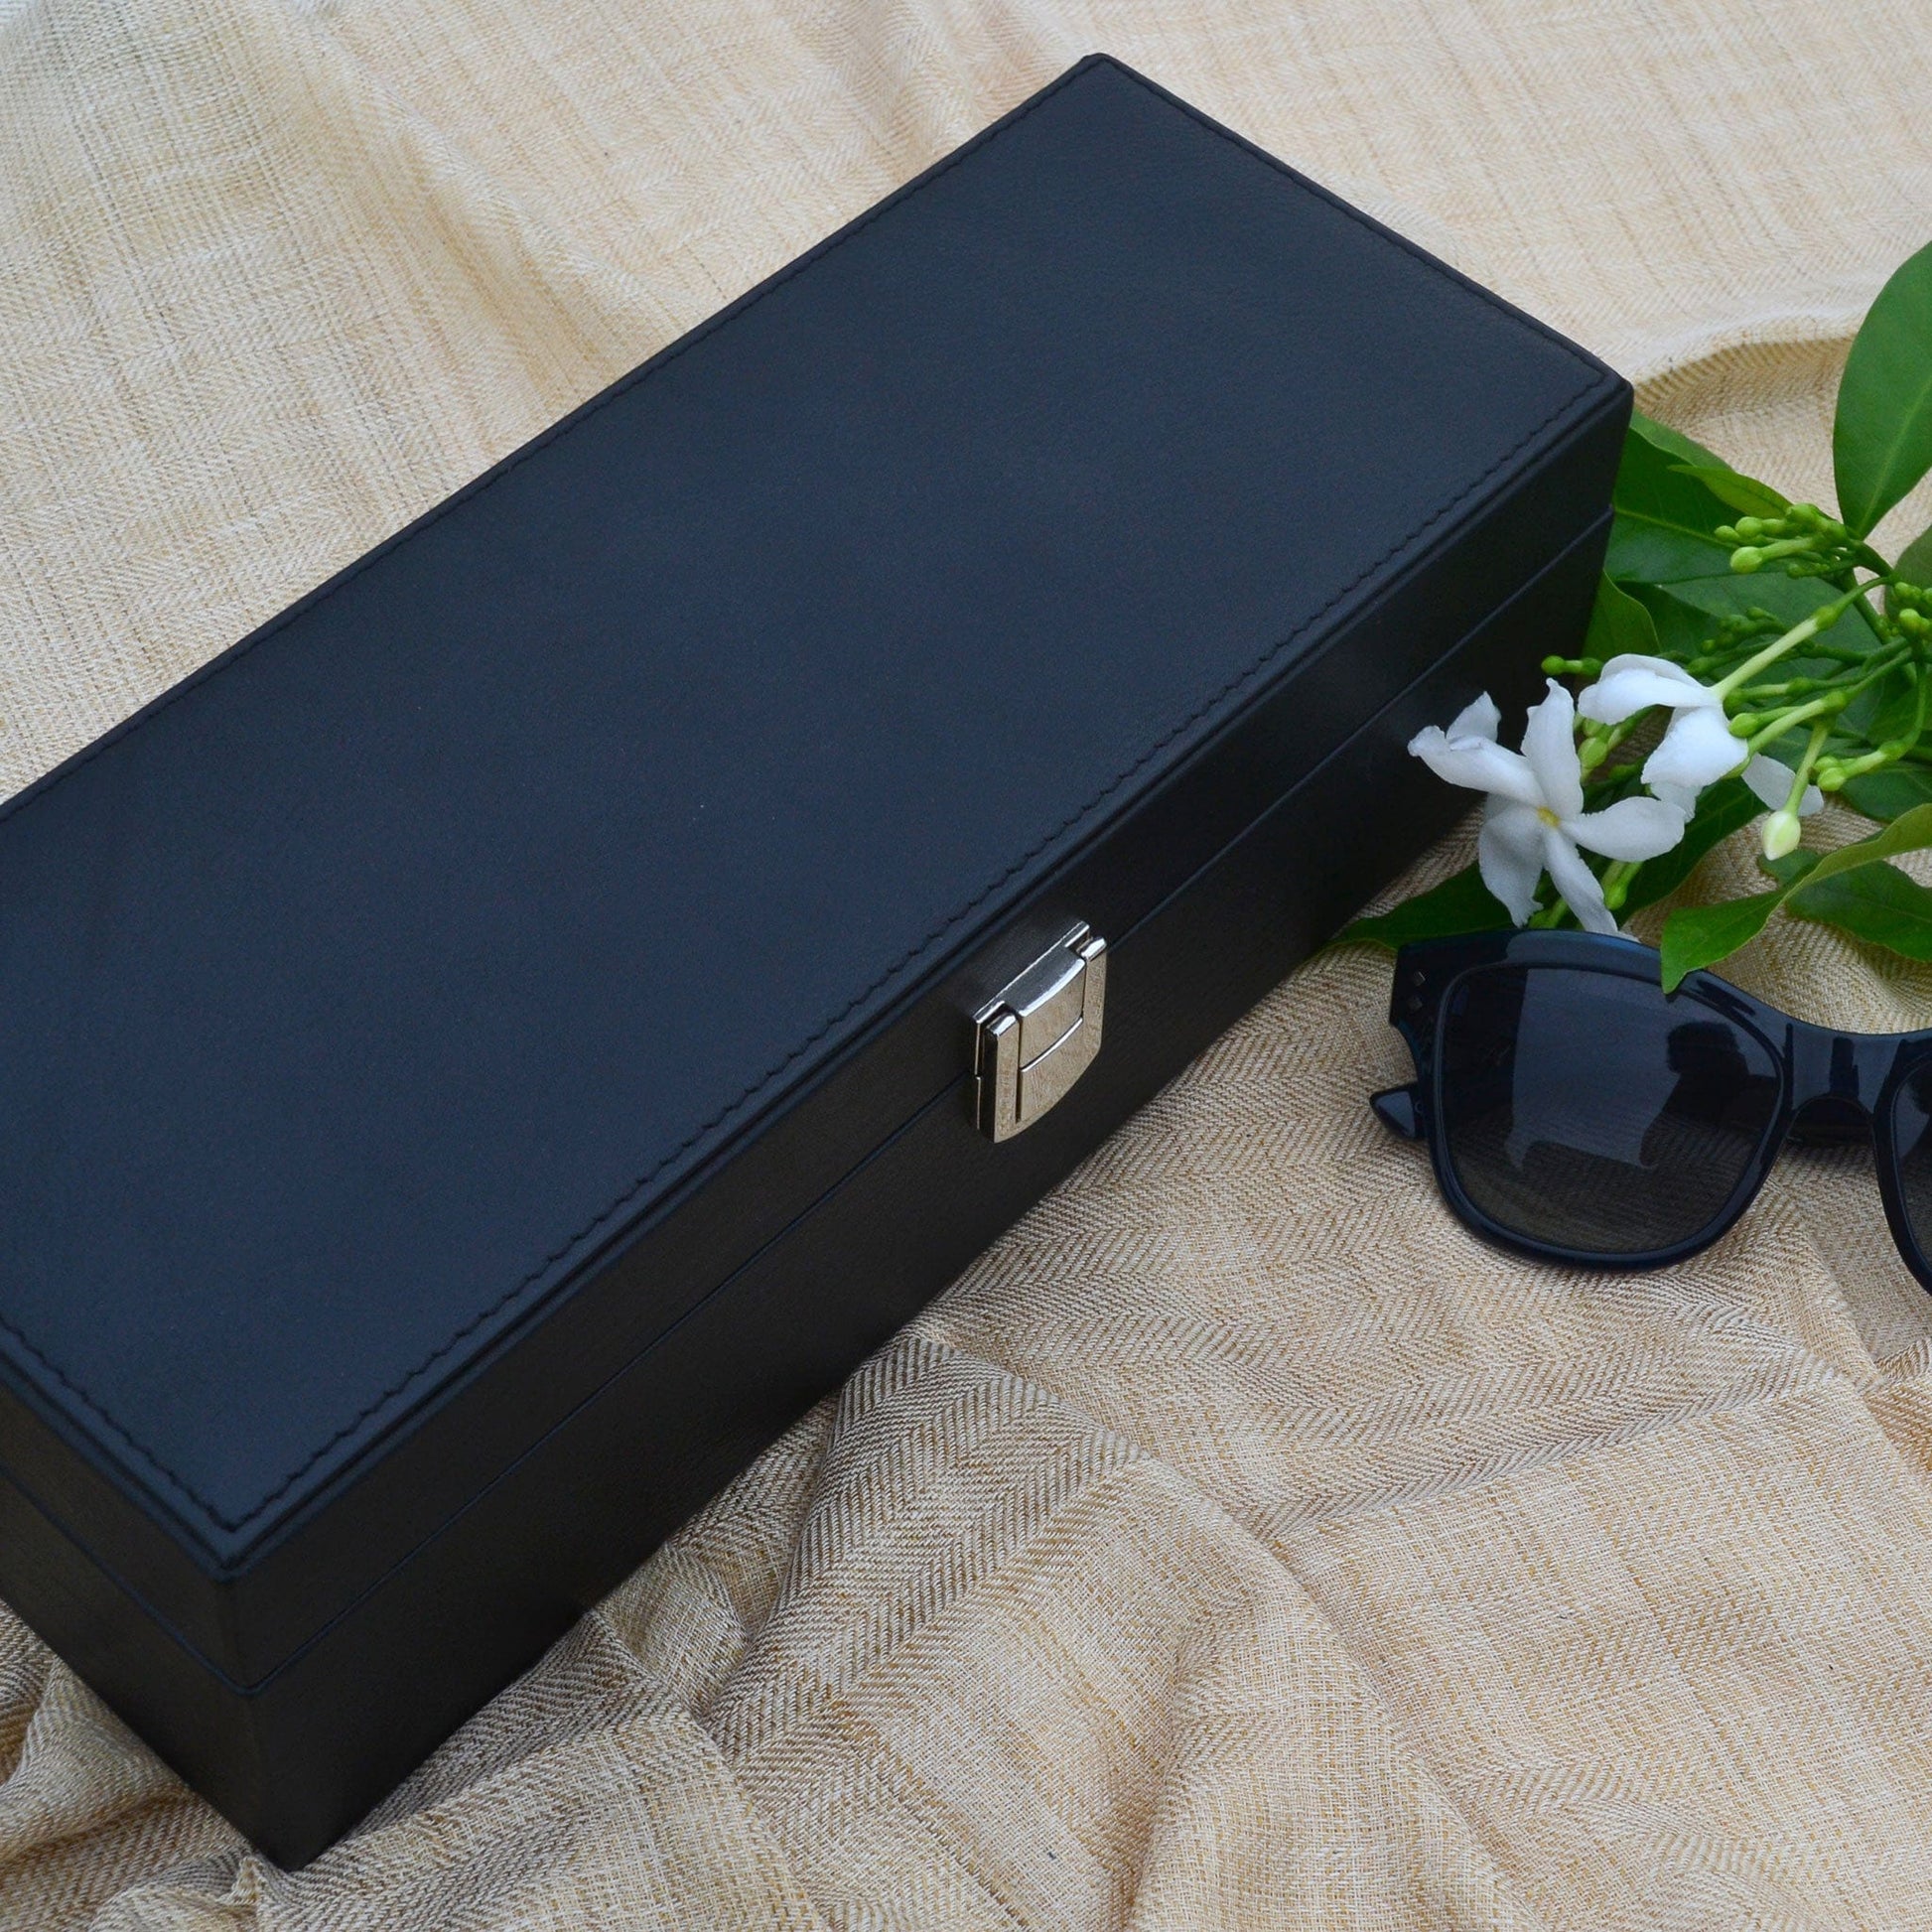 Studio Decorai Watch Box Black Beauty - Magnolia Blossoms - Handcrafted Leather Watch Box